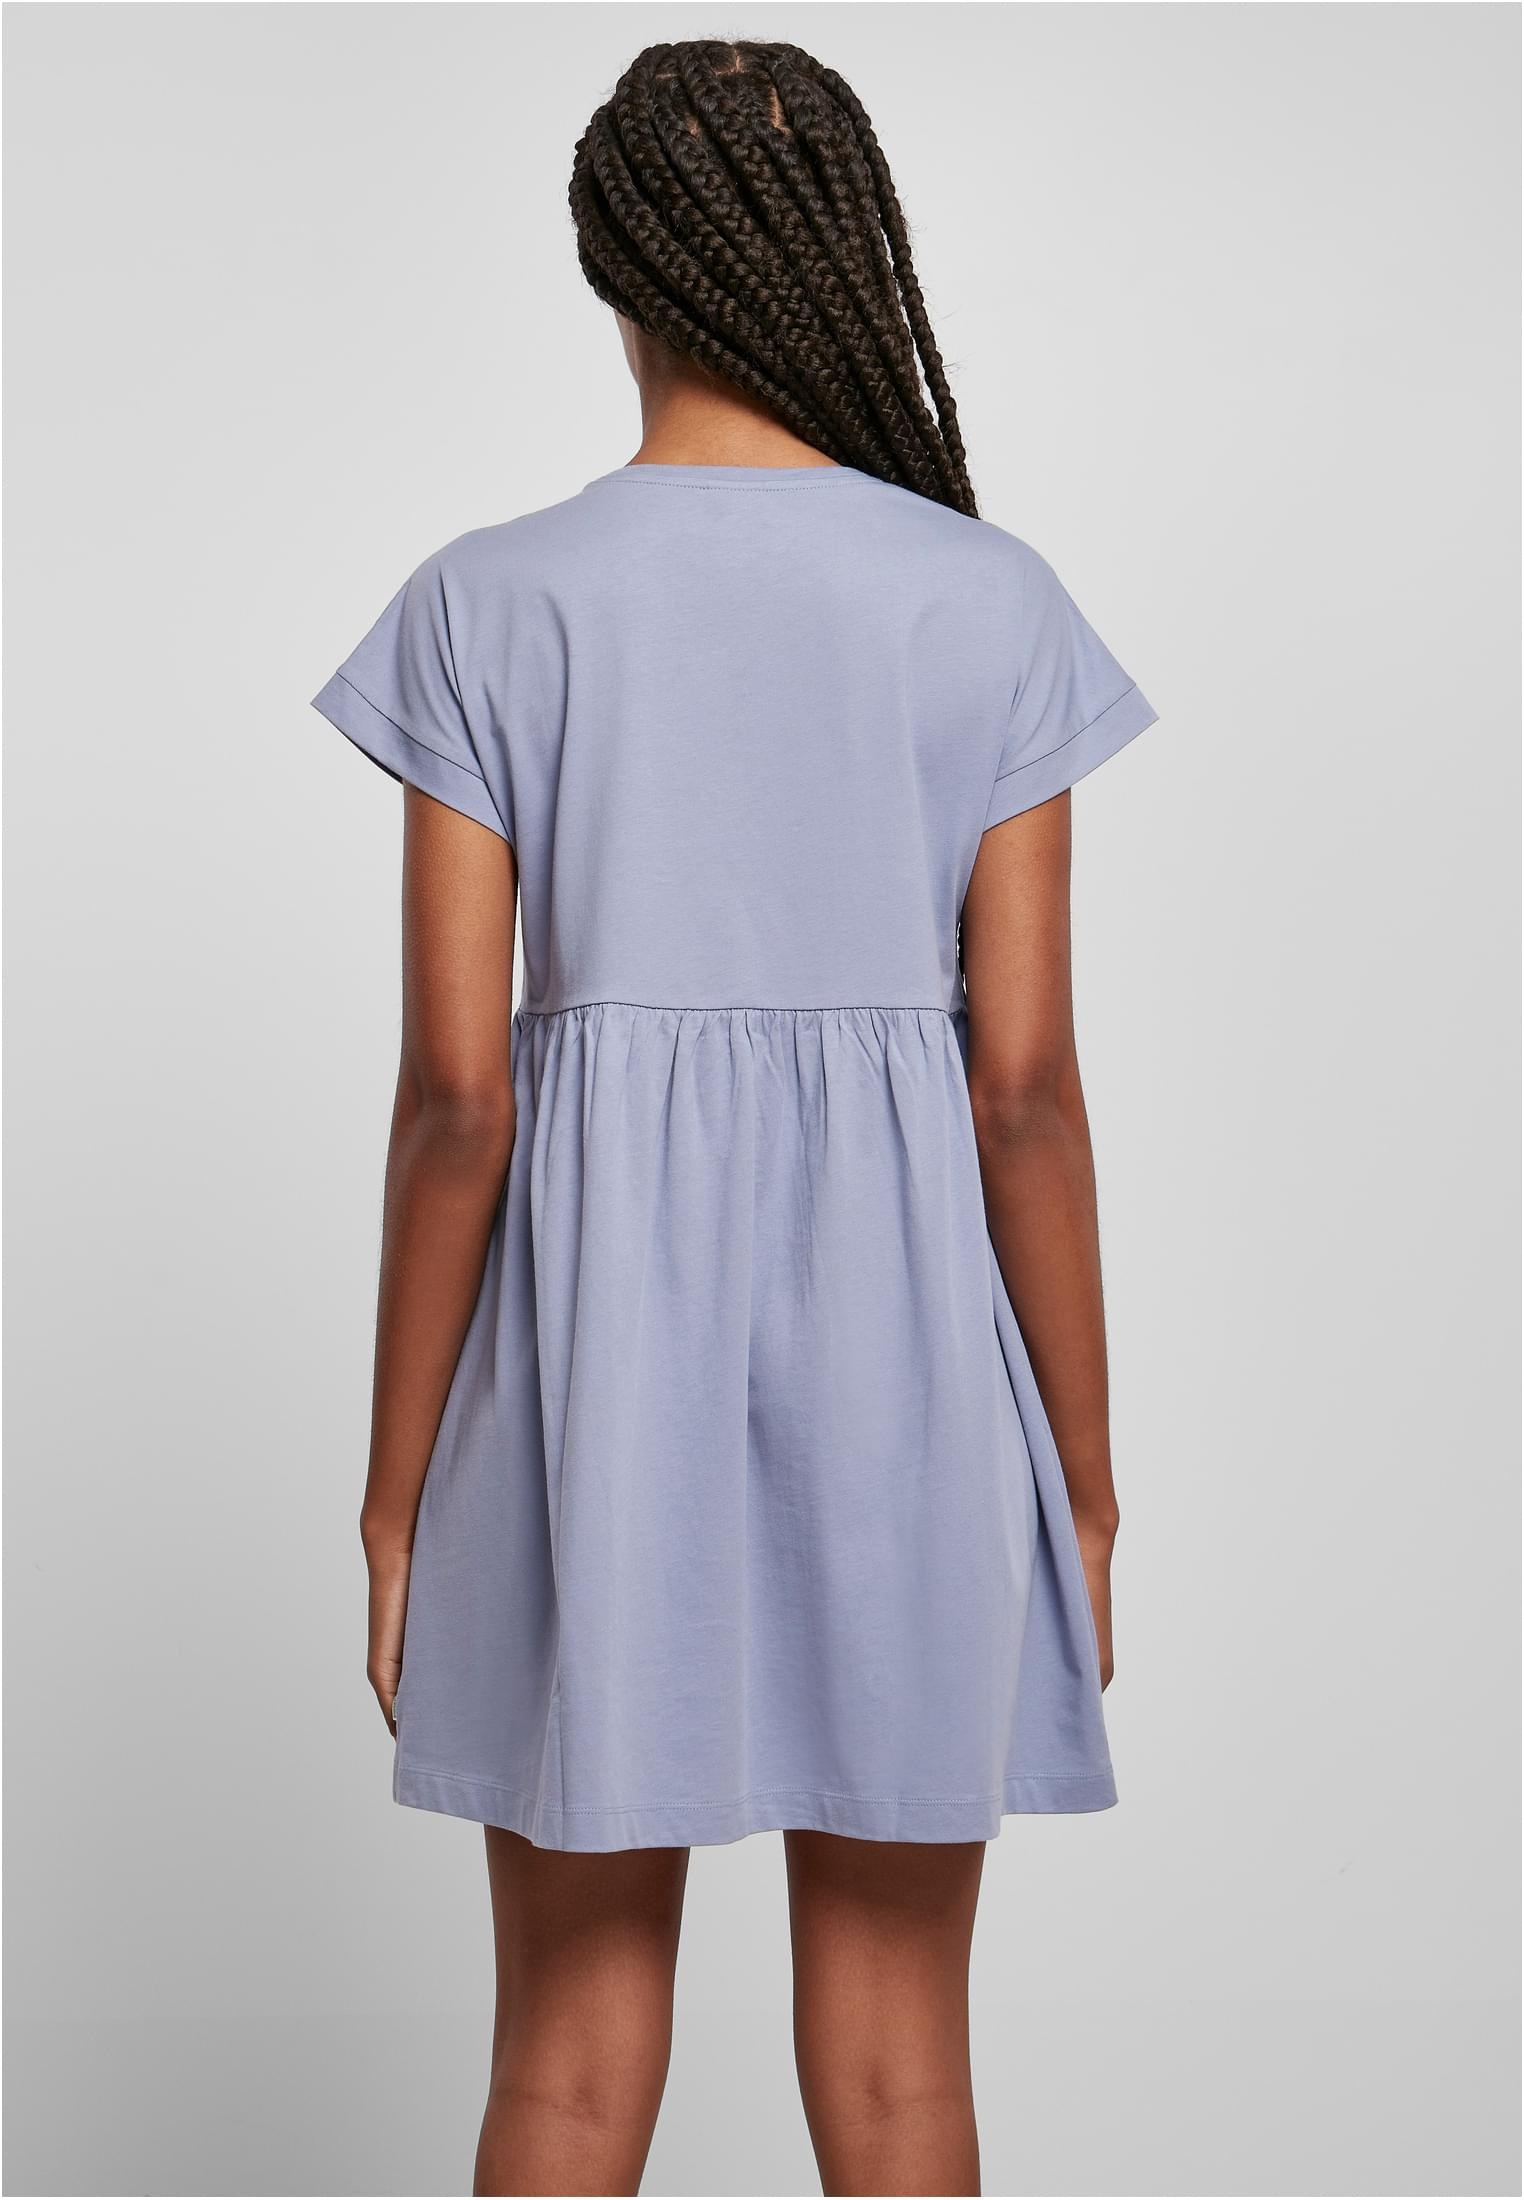 Tee online I\'m Dress«, tlg.) (1 URBAN Empire Valance kaufen walking Jerseykleid Organic | »Damen CLASSICS Ladies